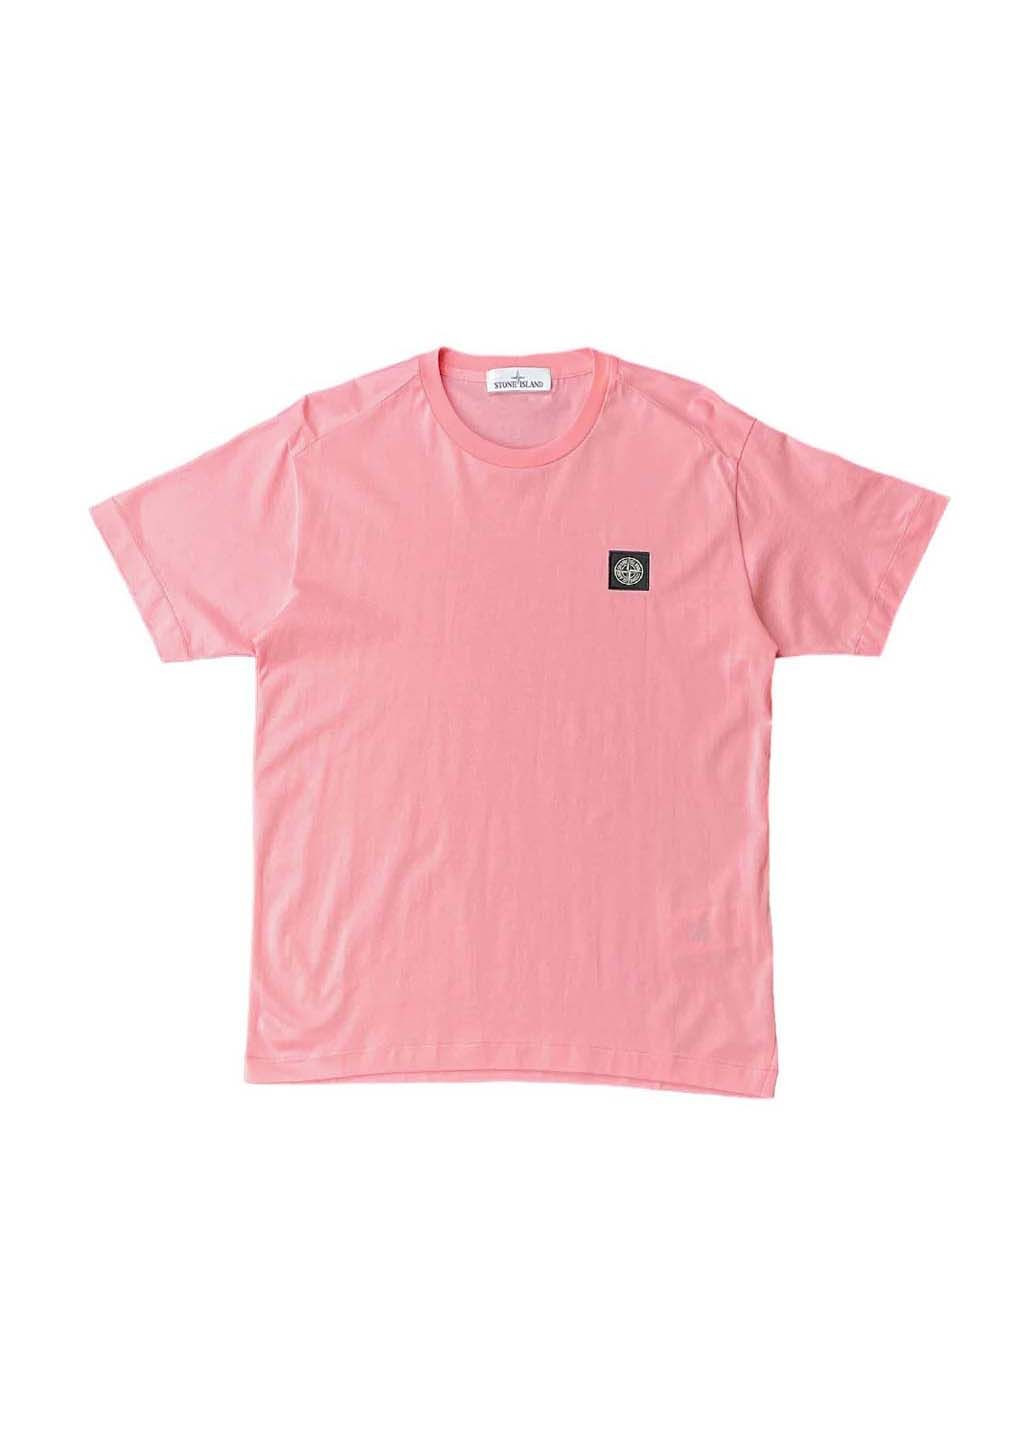 Розовая футболка 24113 pink Stone Island